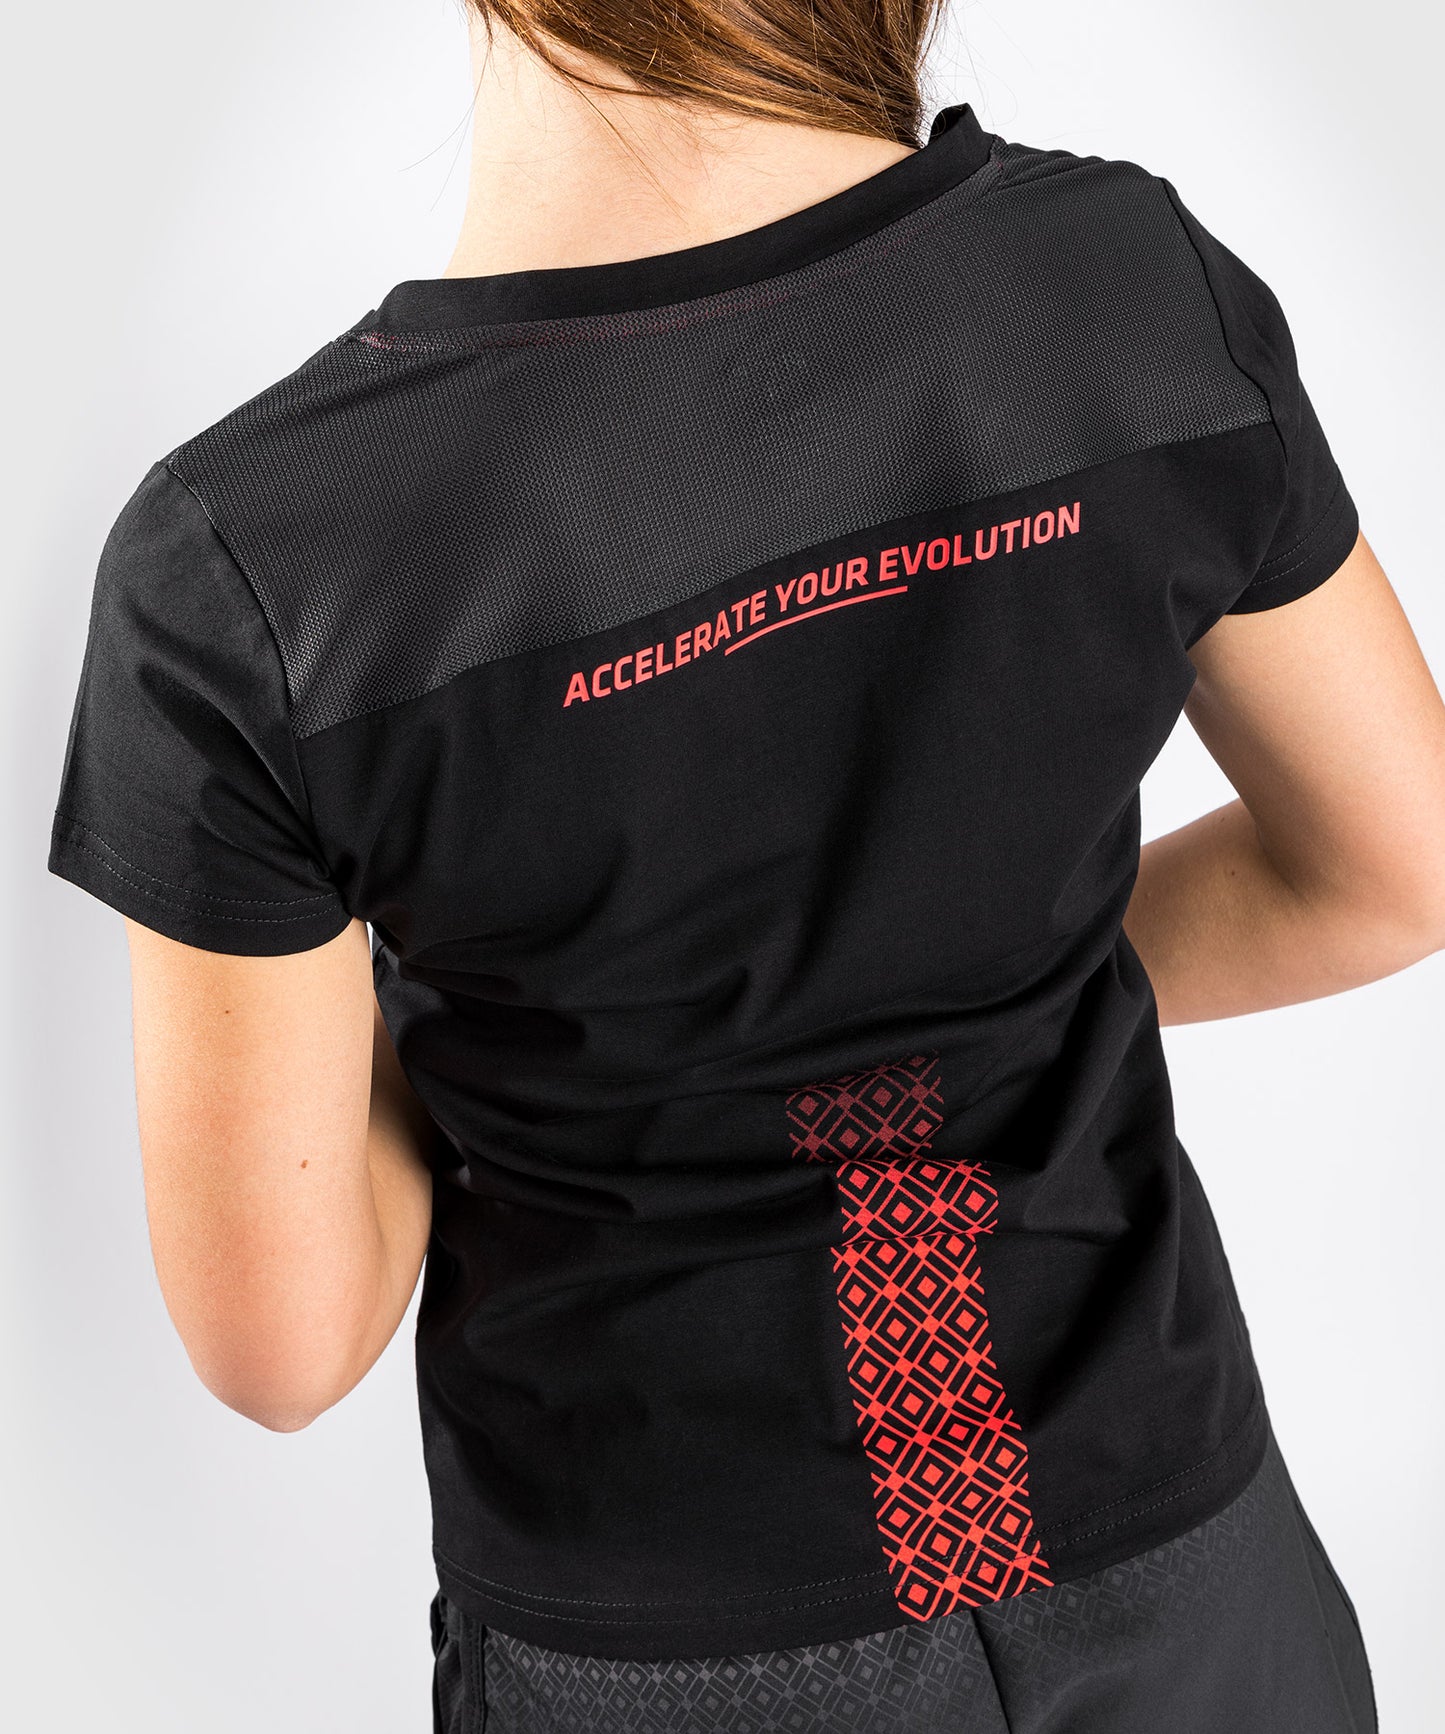 UFC Venum Performance Institute T-Shirt - For Women - Black